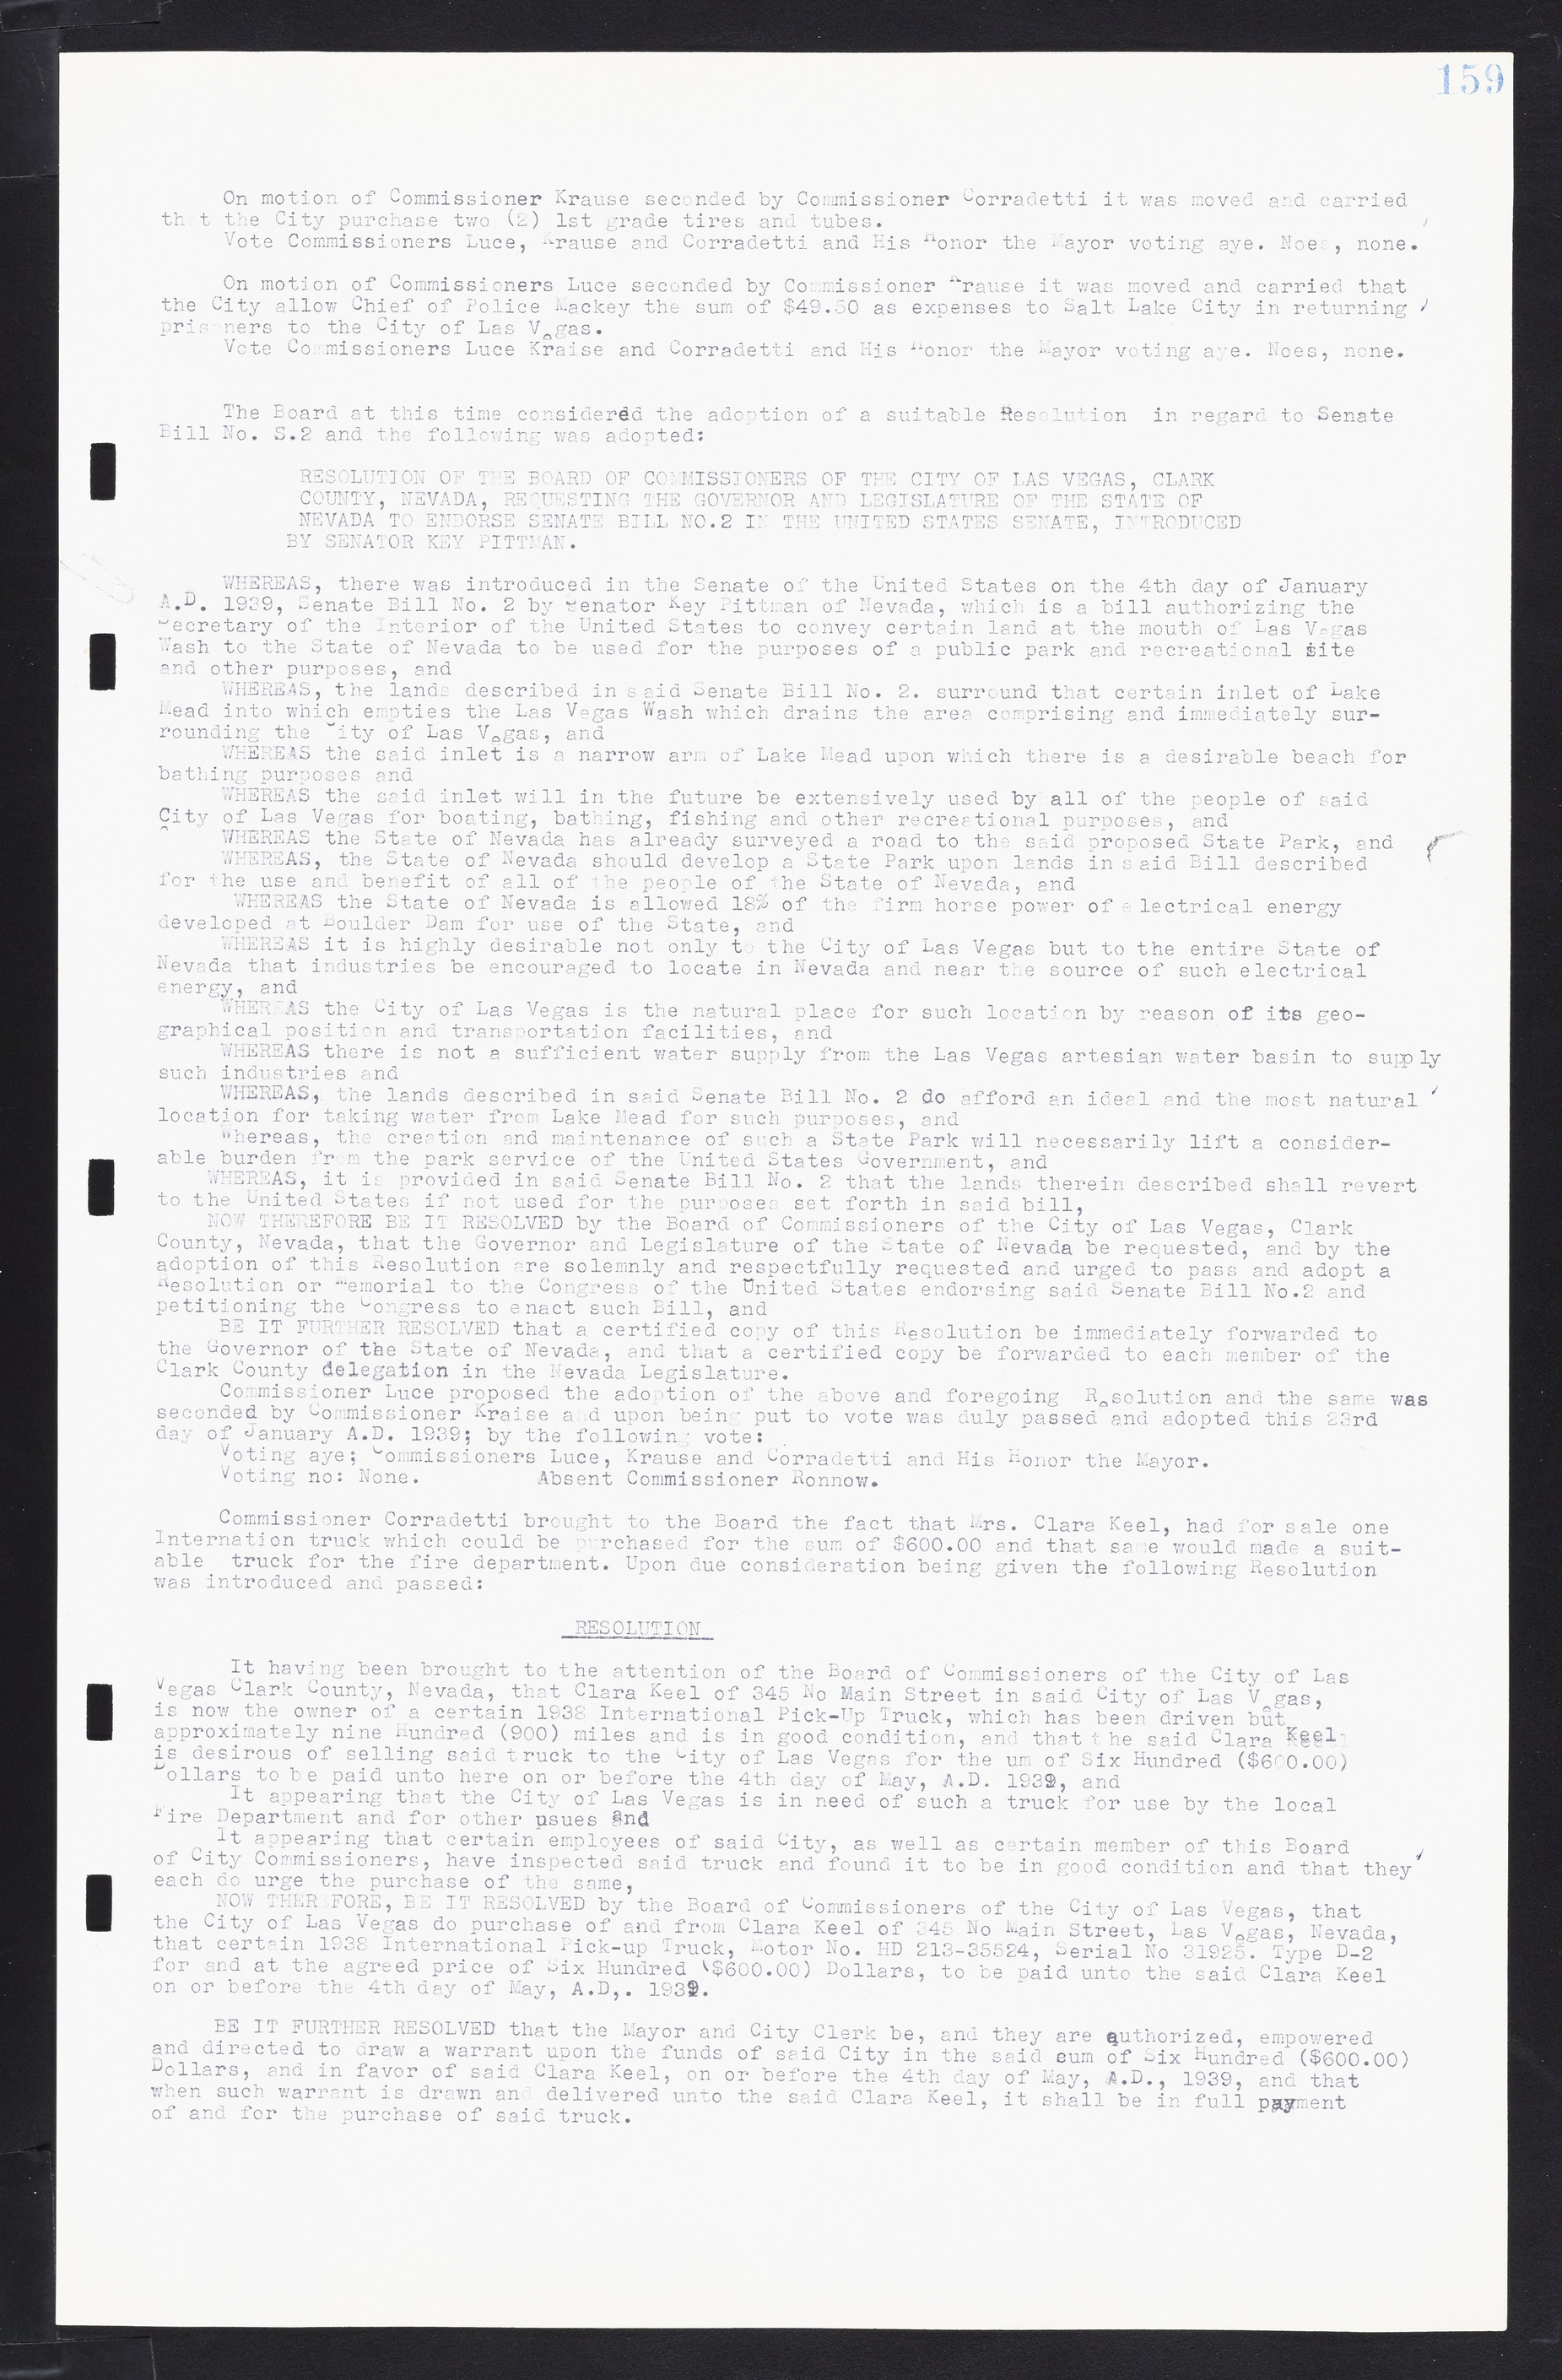 Las Vegas City Commission Minutes, February 17, 1937 to August 4, 1942, lvc000004-175